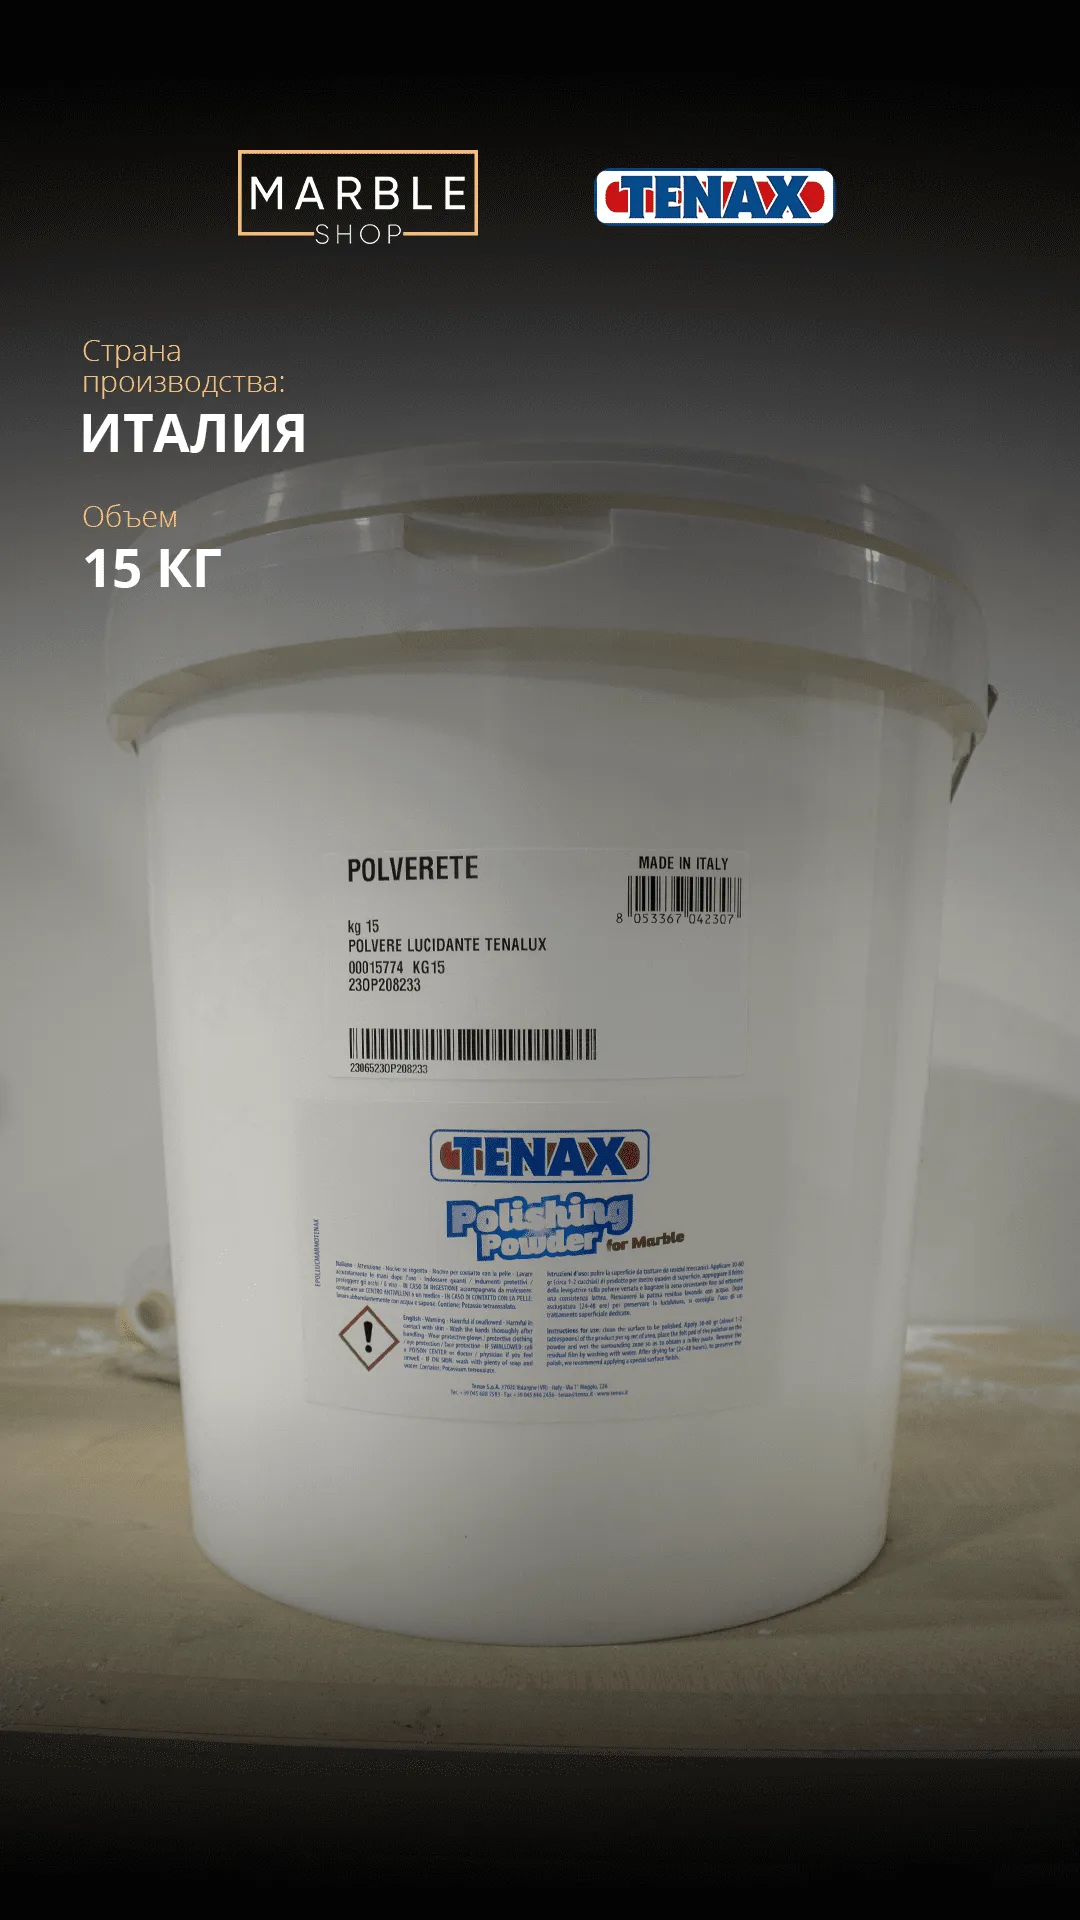 Polvere luci DANTETENALUX TENAX marmar polishing kukuni kristalizatori#1